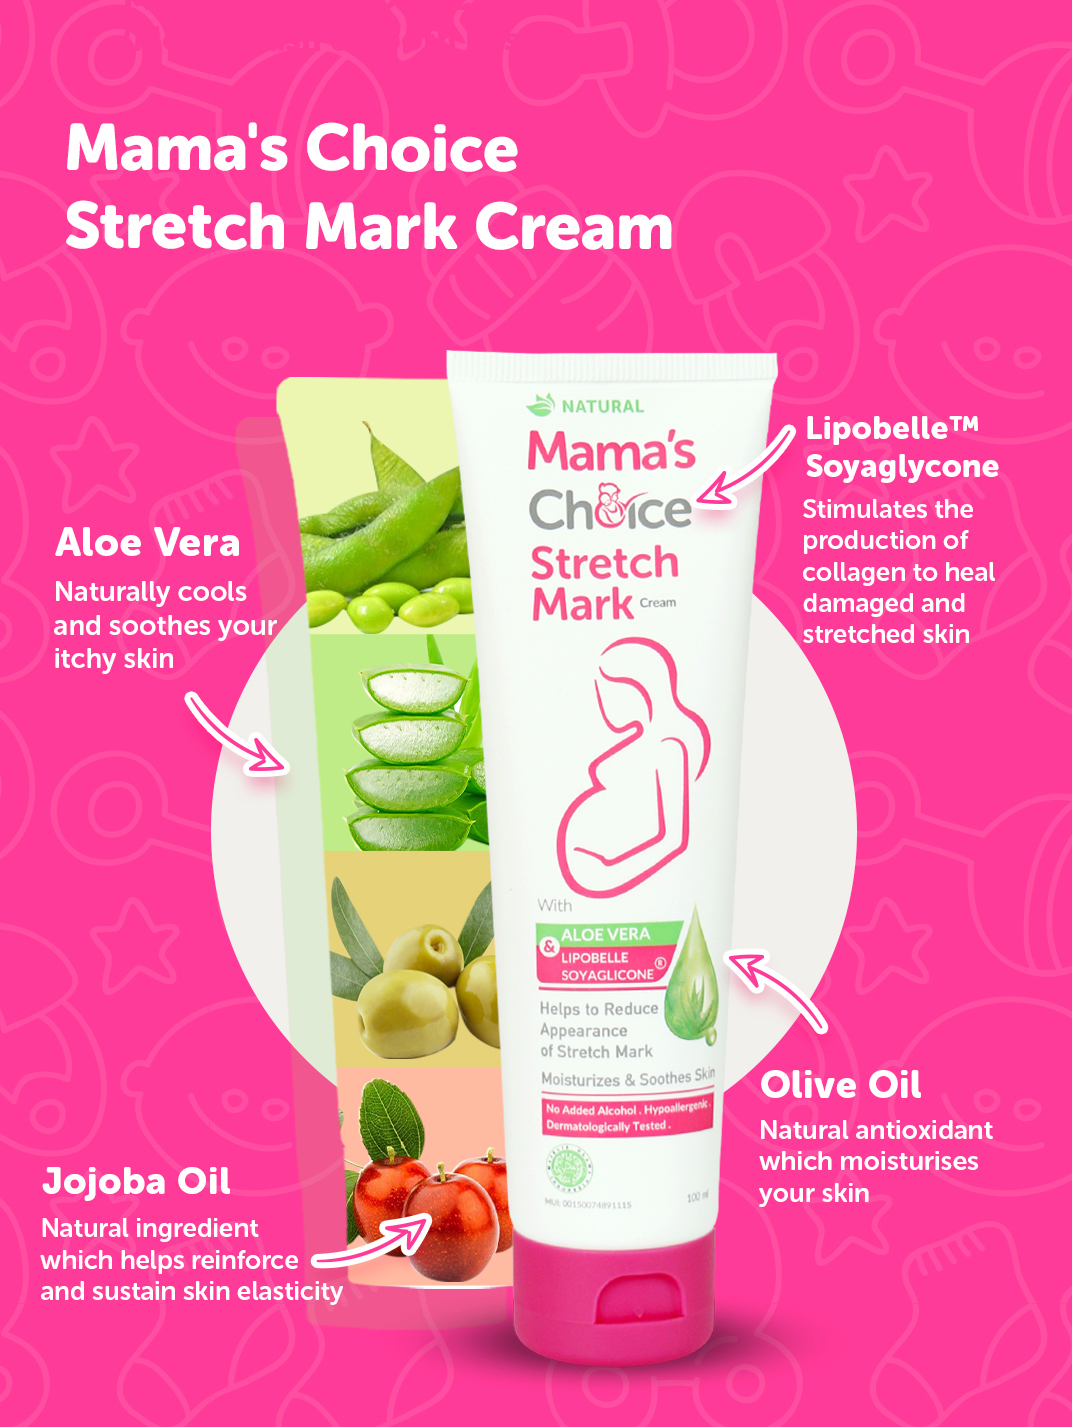 Mama's Choice paraben-free Stretch Mark Cream ingredients